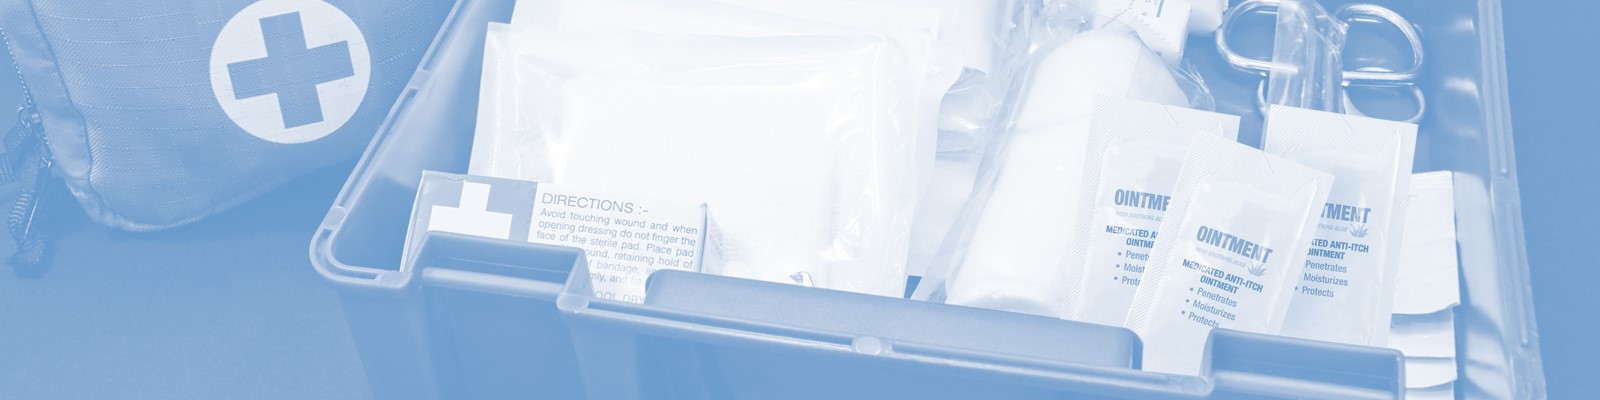 medical aid kits packaging